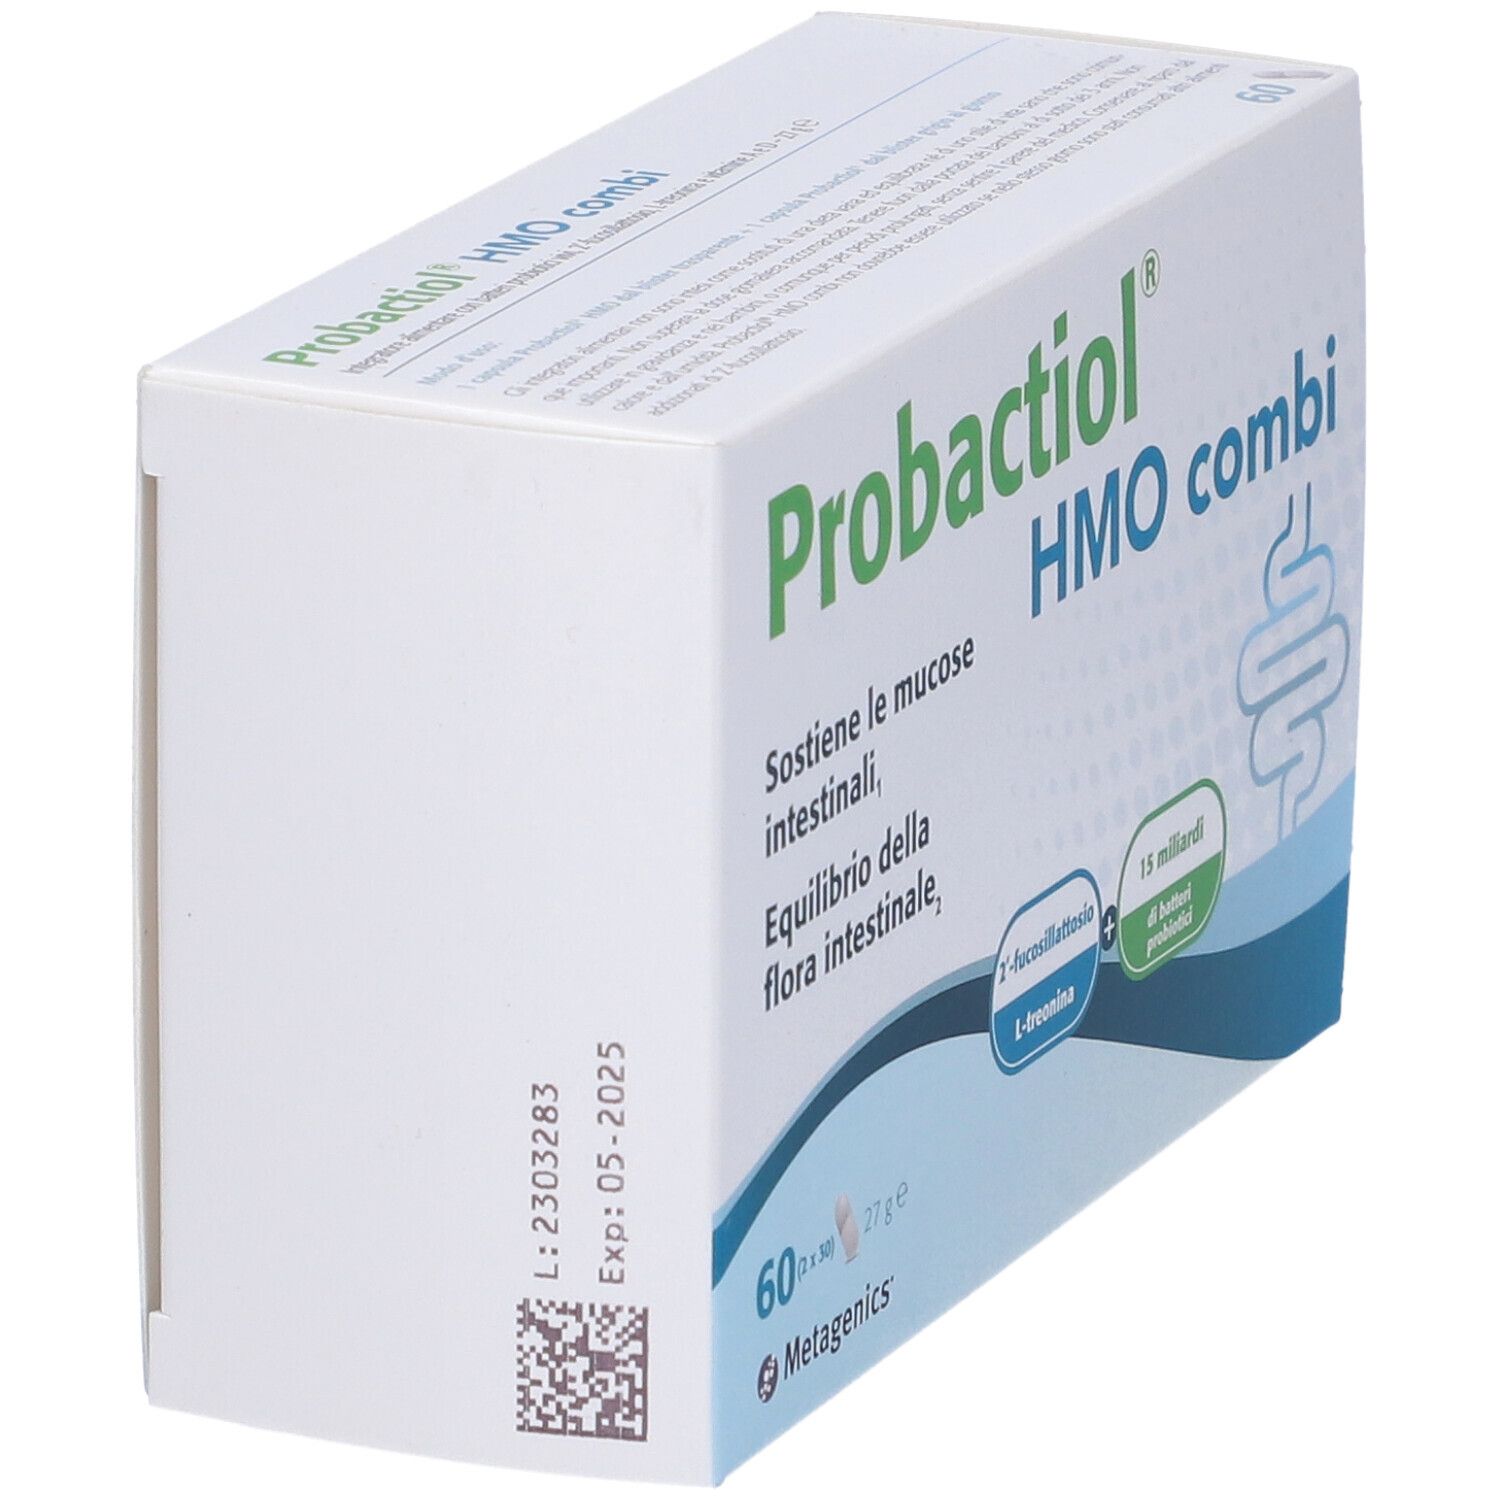 Metagenics™ Probactiol® HMO Combi